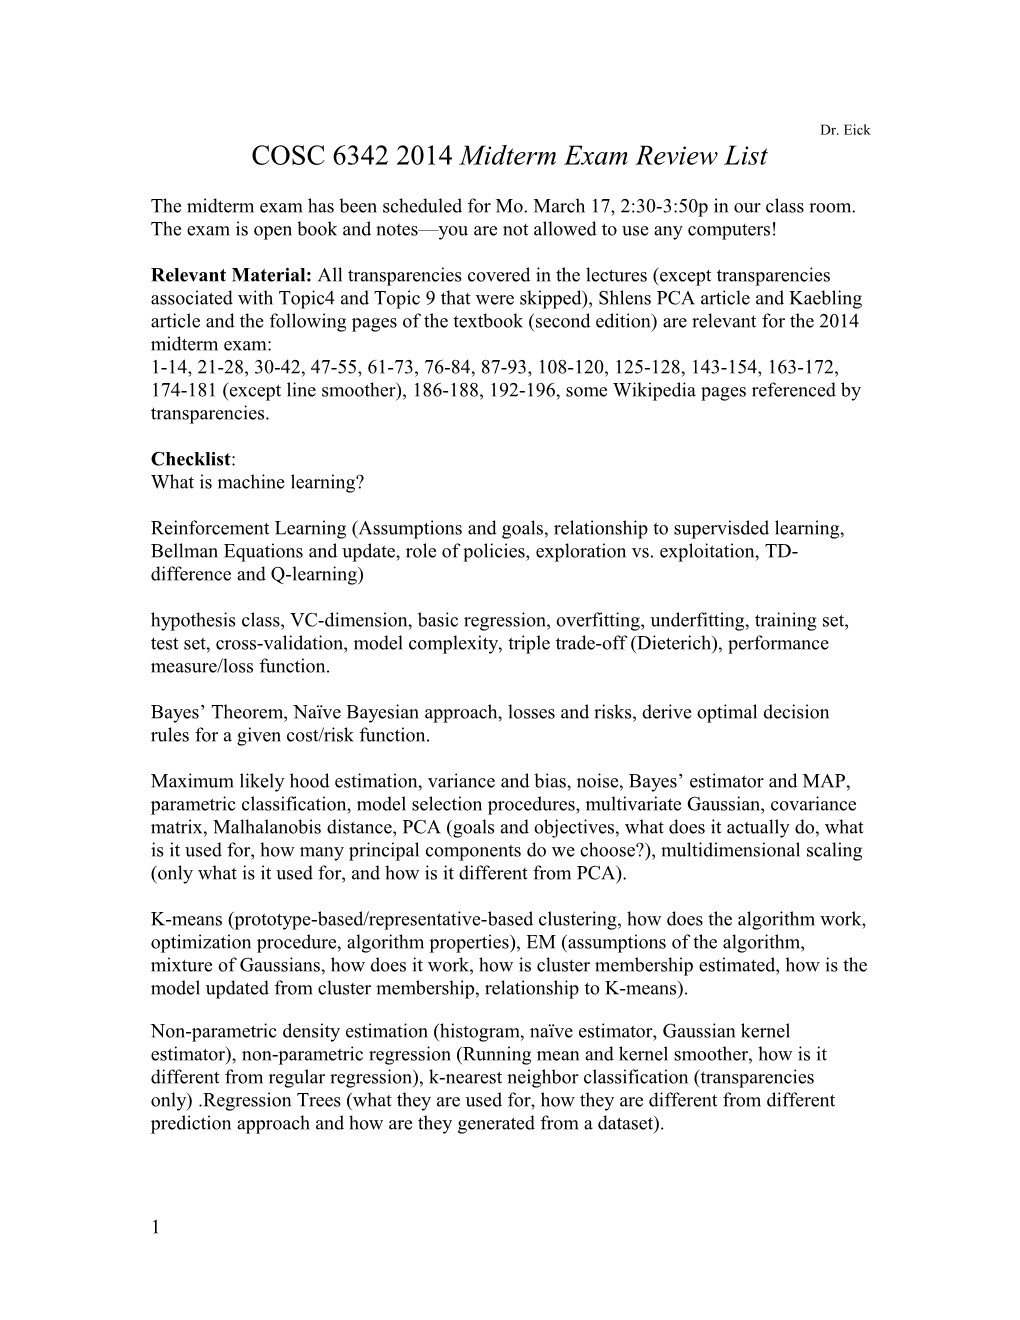 COSC 6342 2014 Midterm Exam Review List